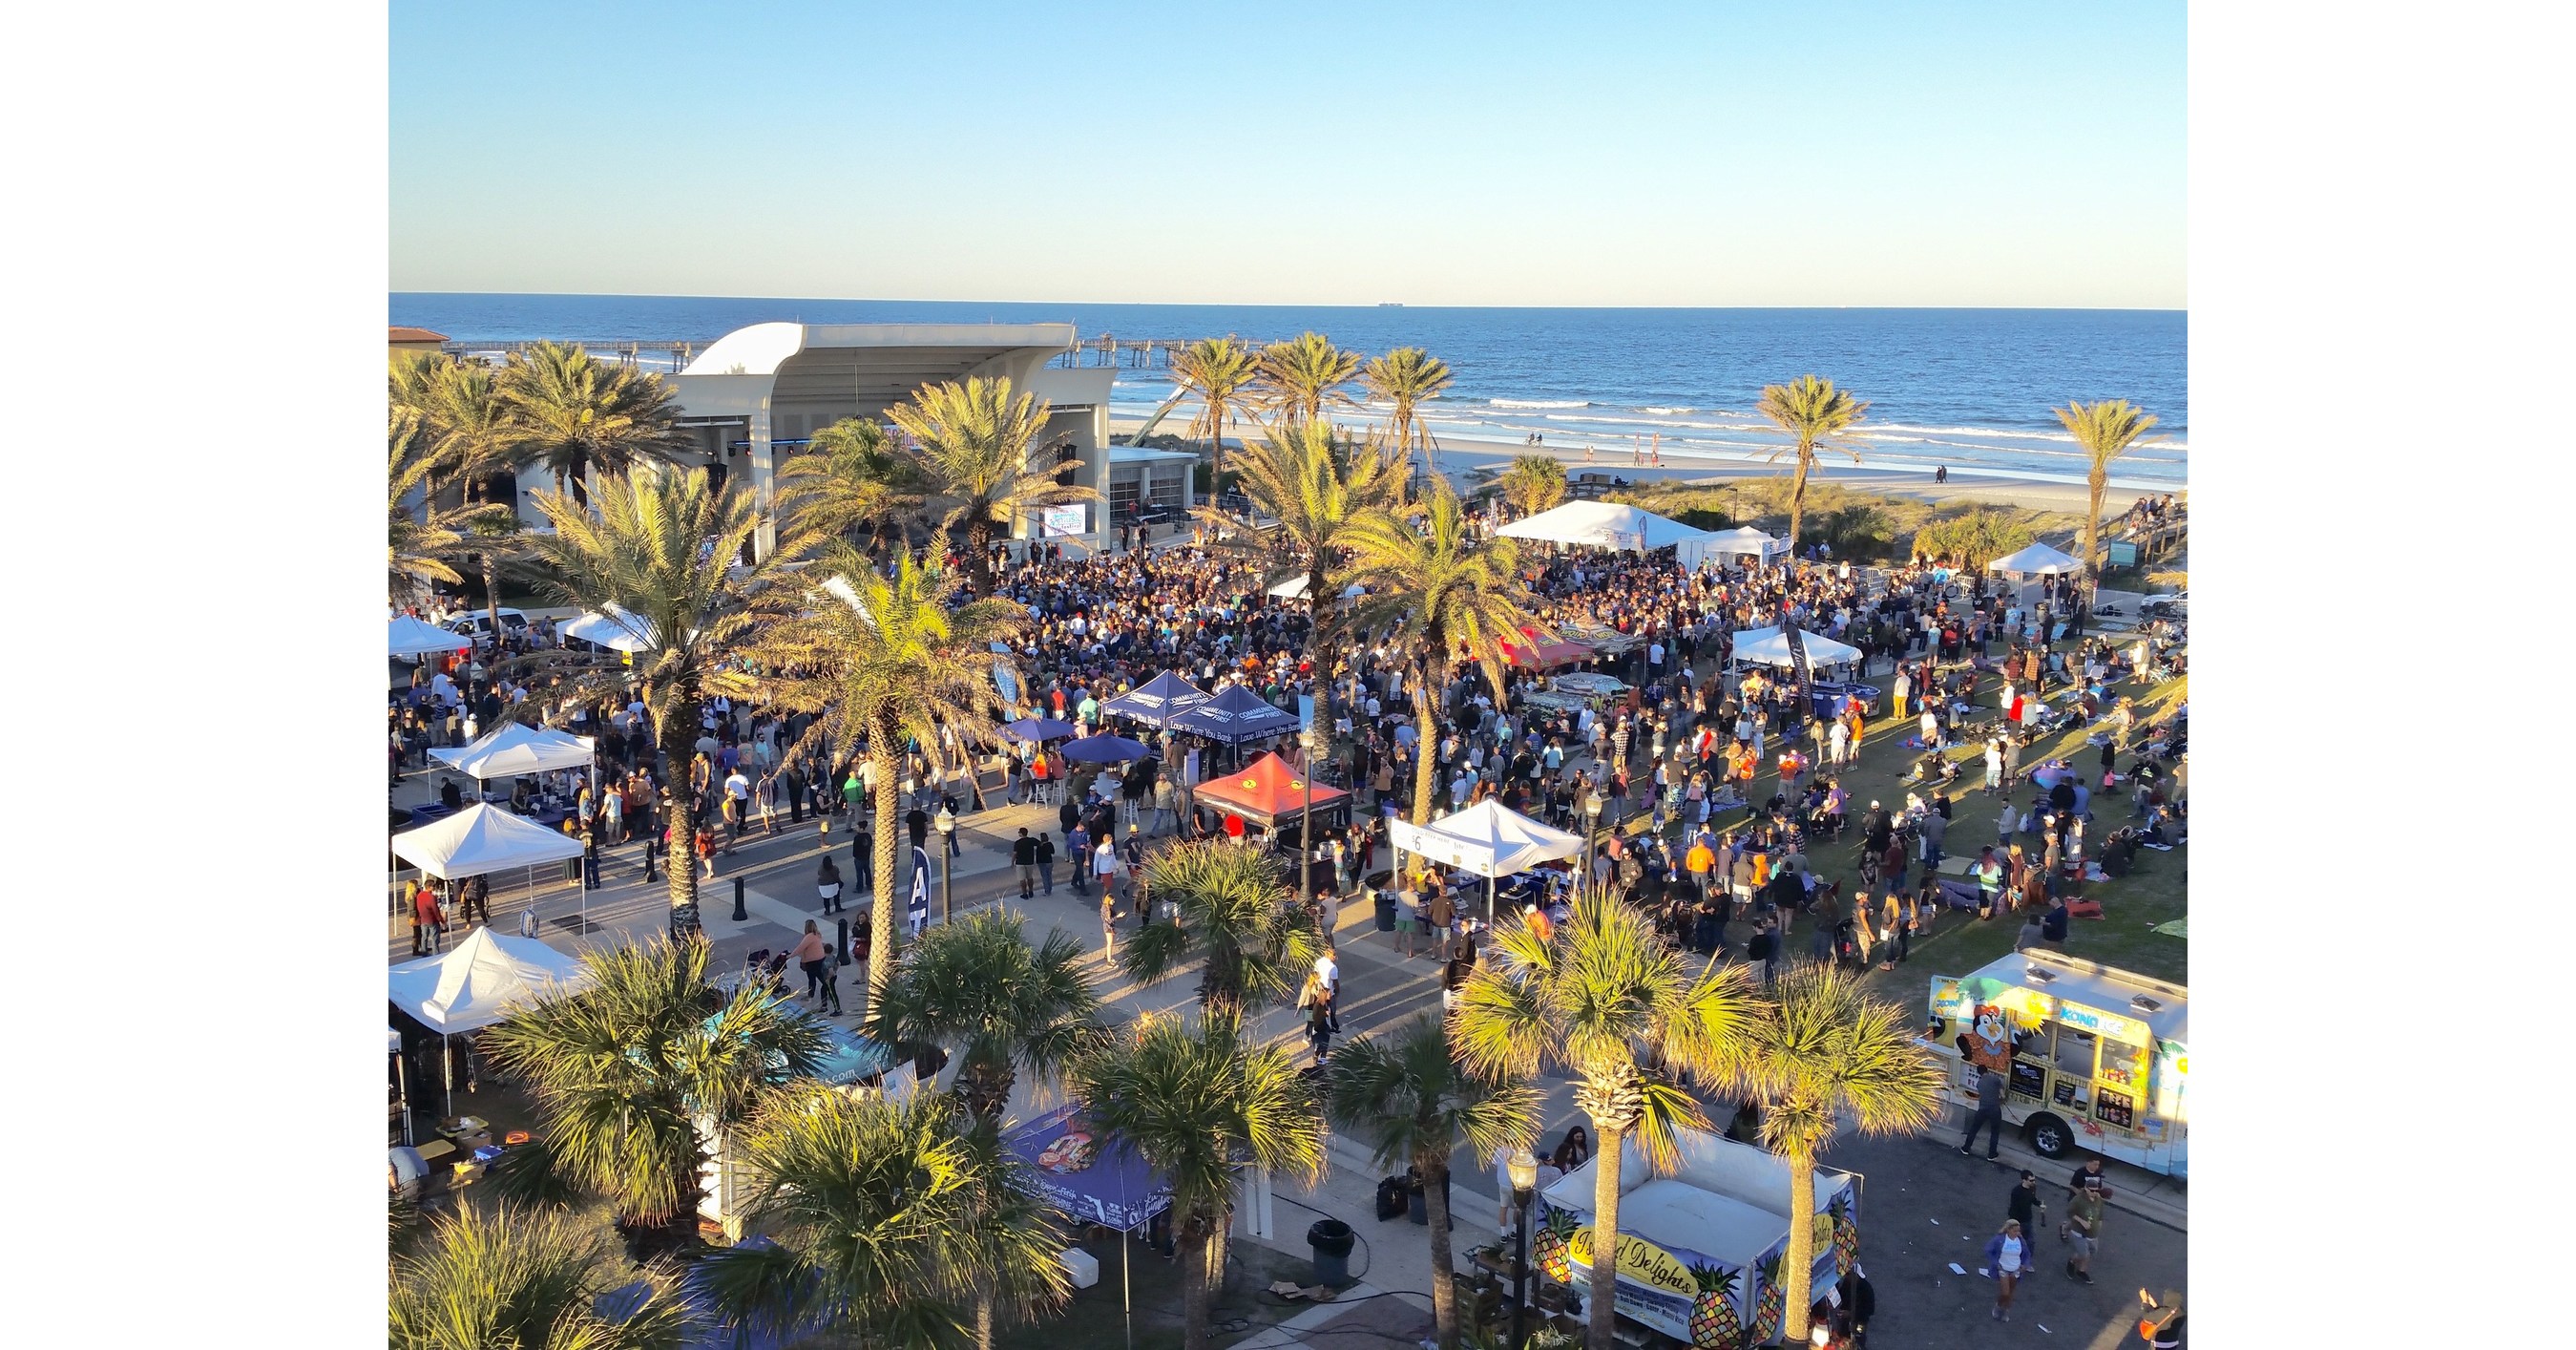 Jax Beach Festivals announces stellar lineup for 2022 Springing the